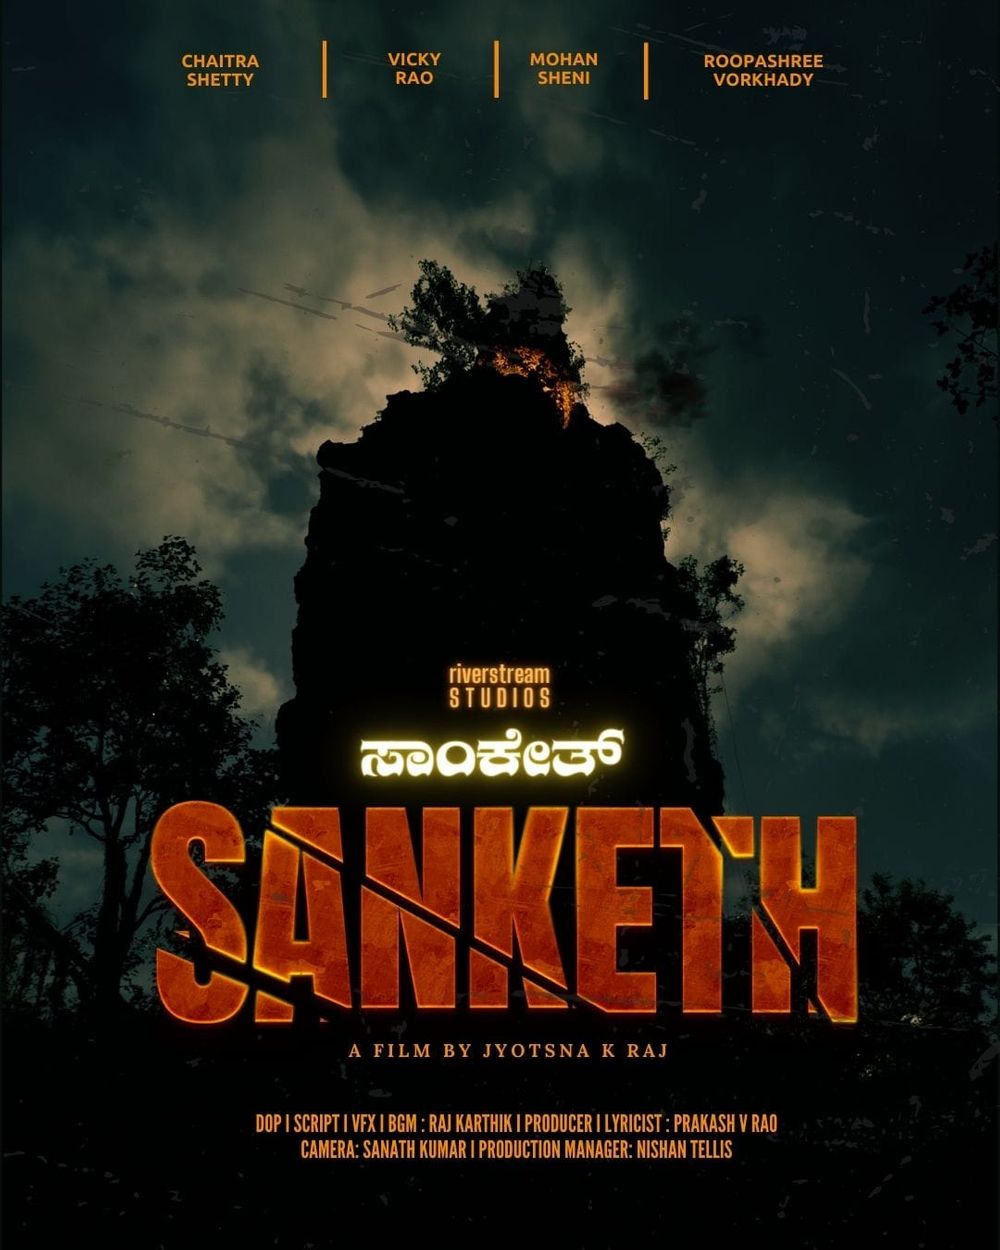 Sanketh Movie Review